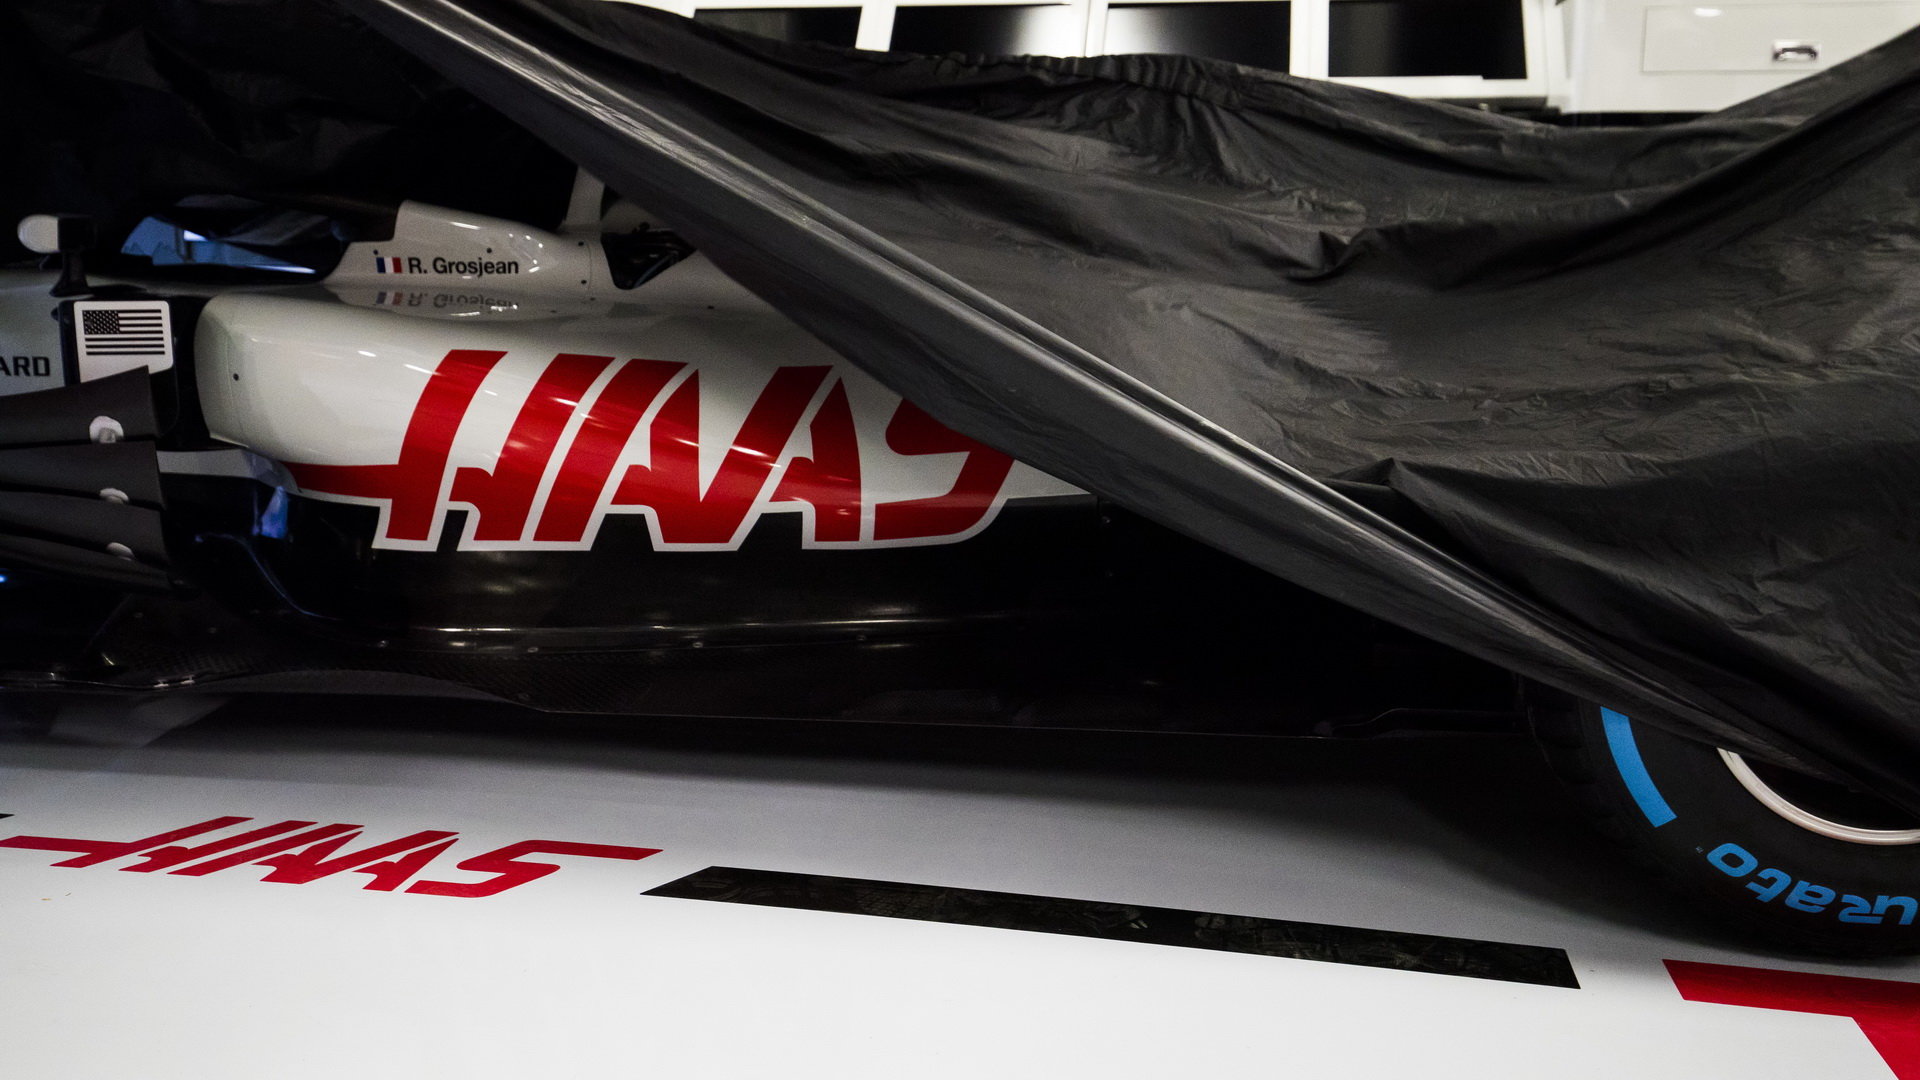 Odhalení nového vozu Haas VF-18 Ferrari pro sezónu 2018